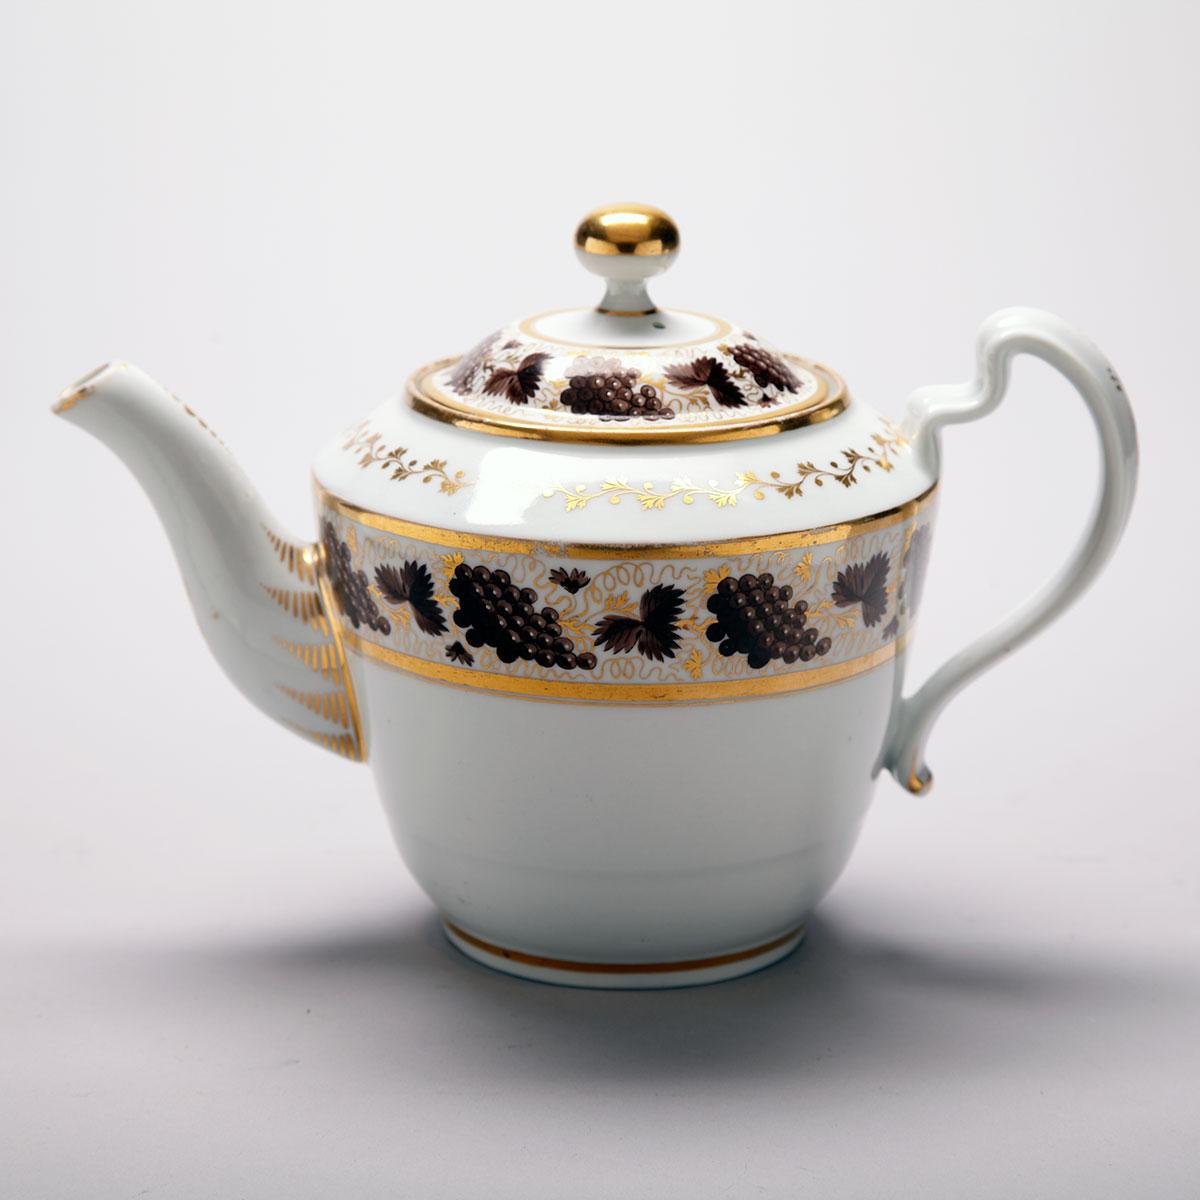 Worcester Teapot, c.1790-1800